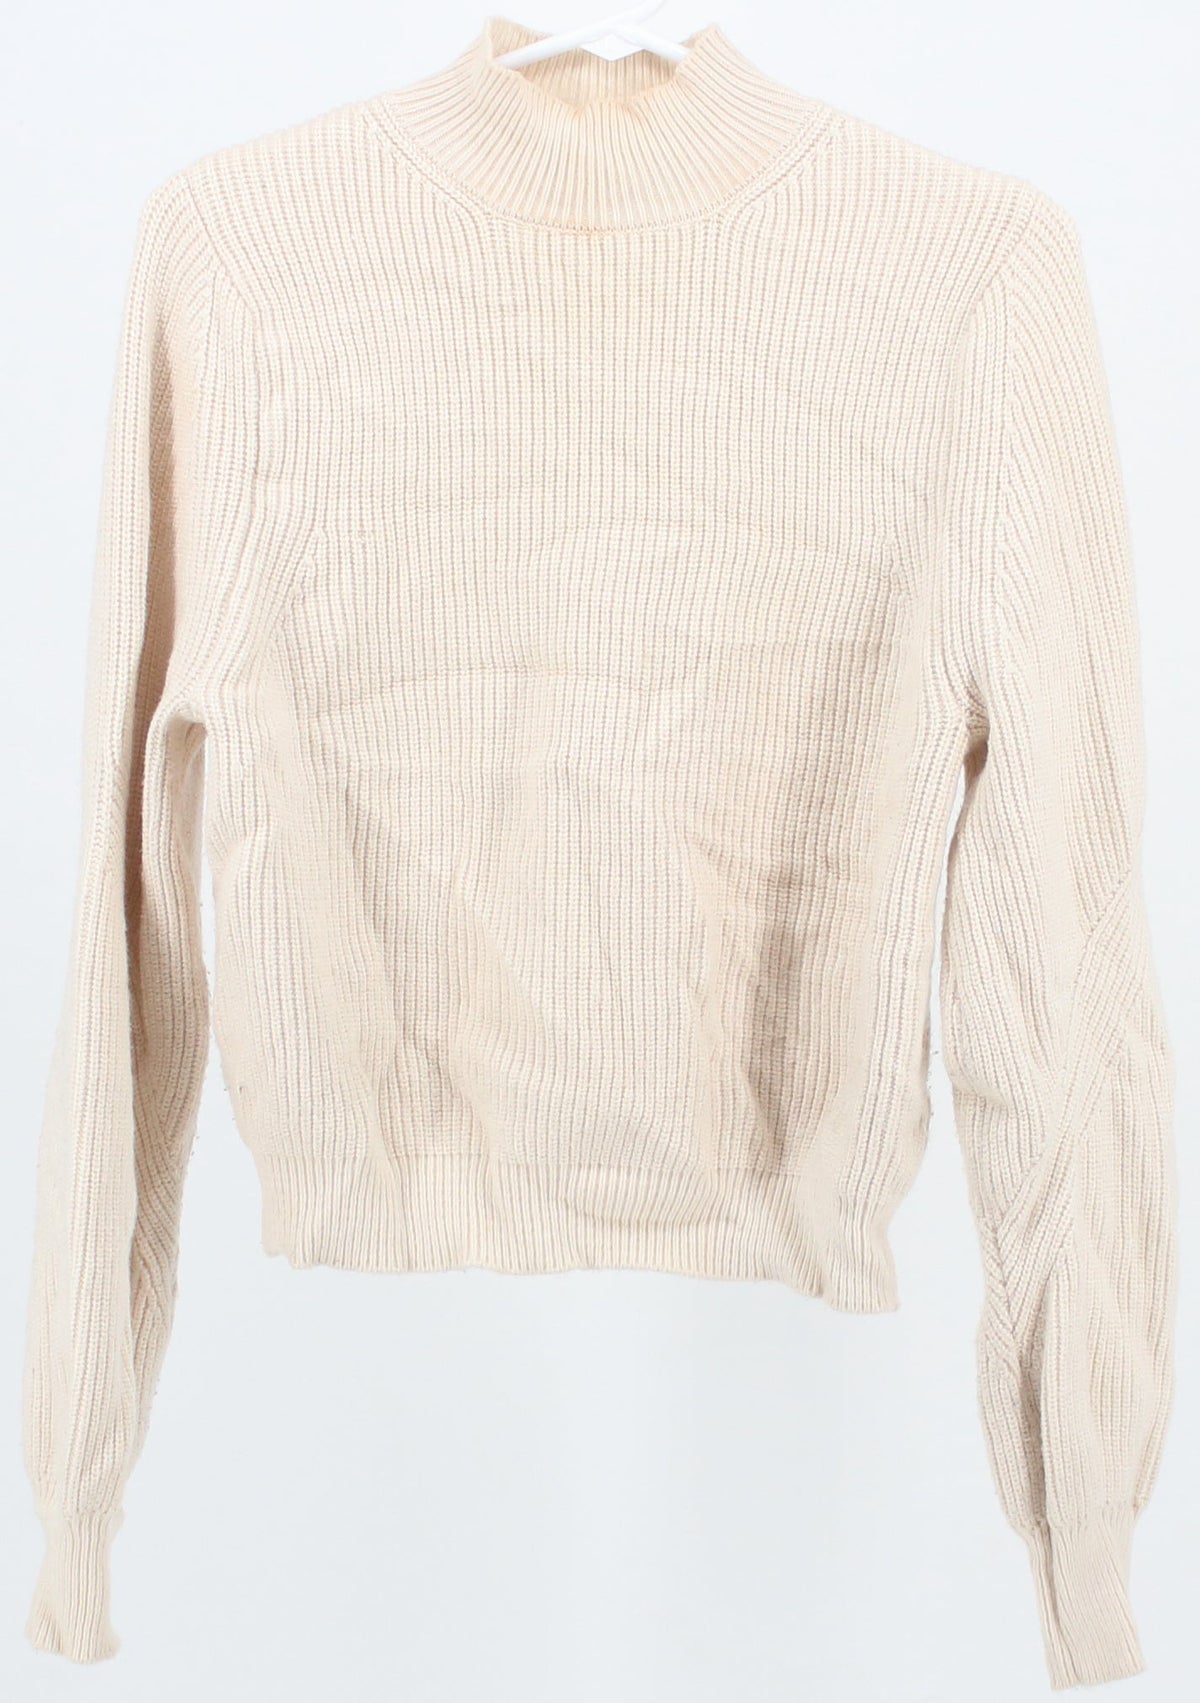 Zara Off White Turtleneck Knit Sweater